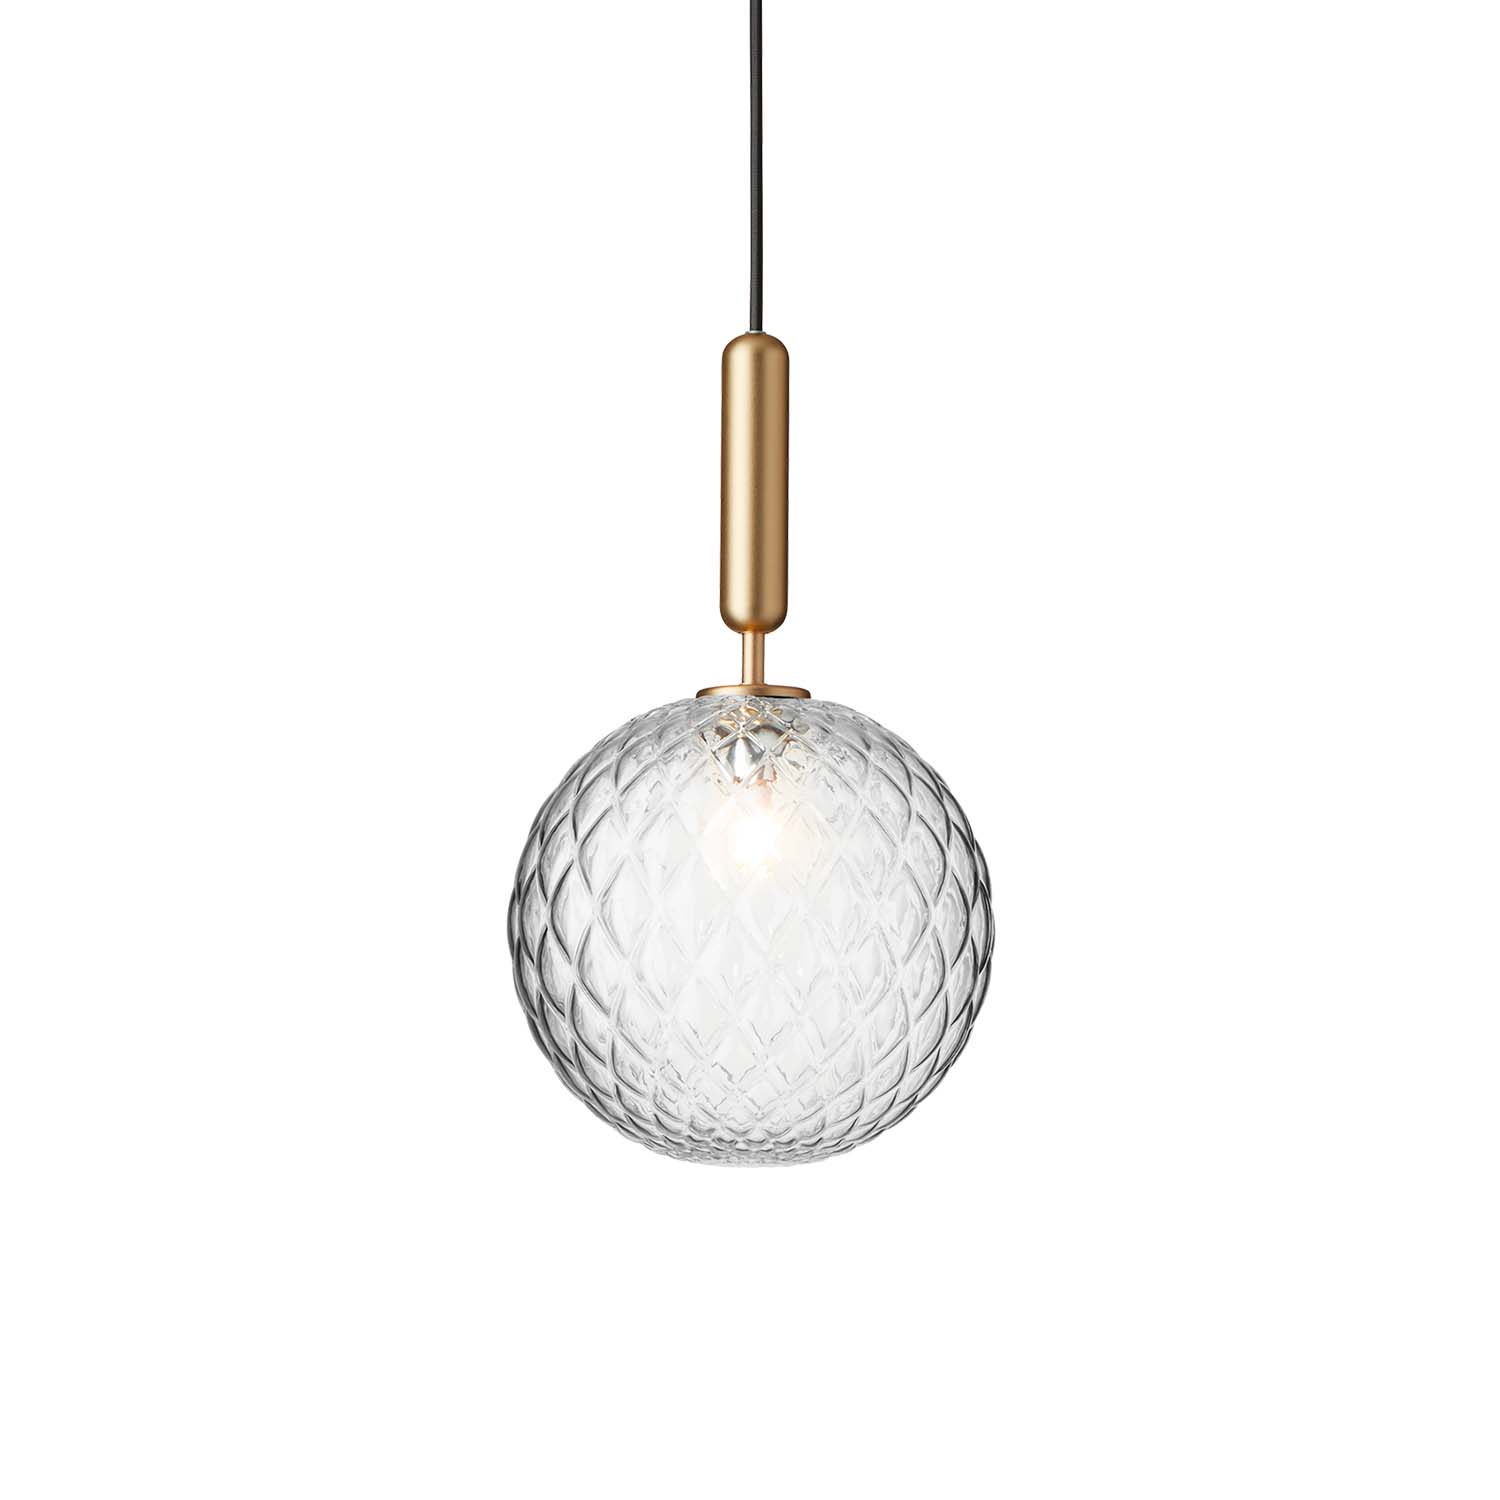 MIIRA 1 Optic - Elegant and minimalist pendant lamp, gold or black